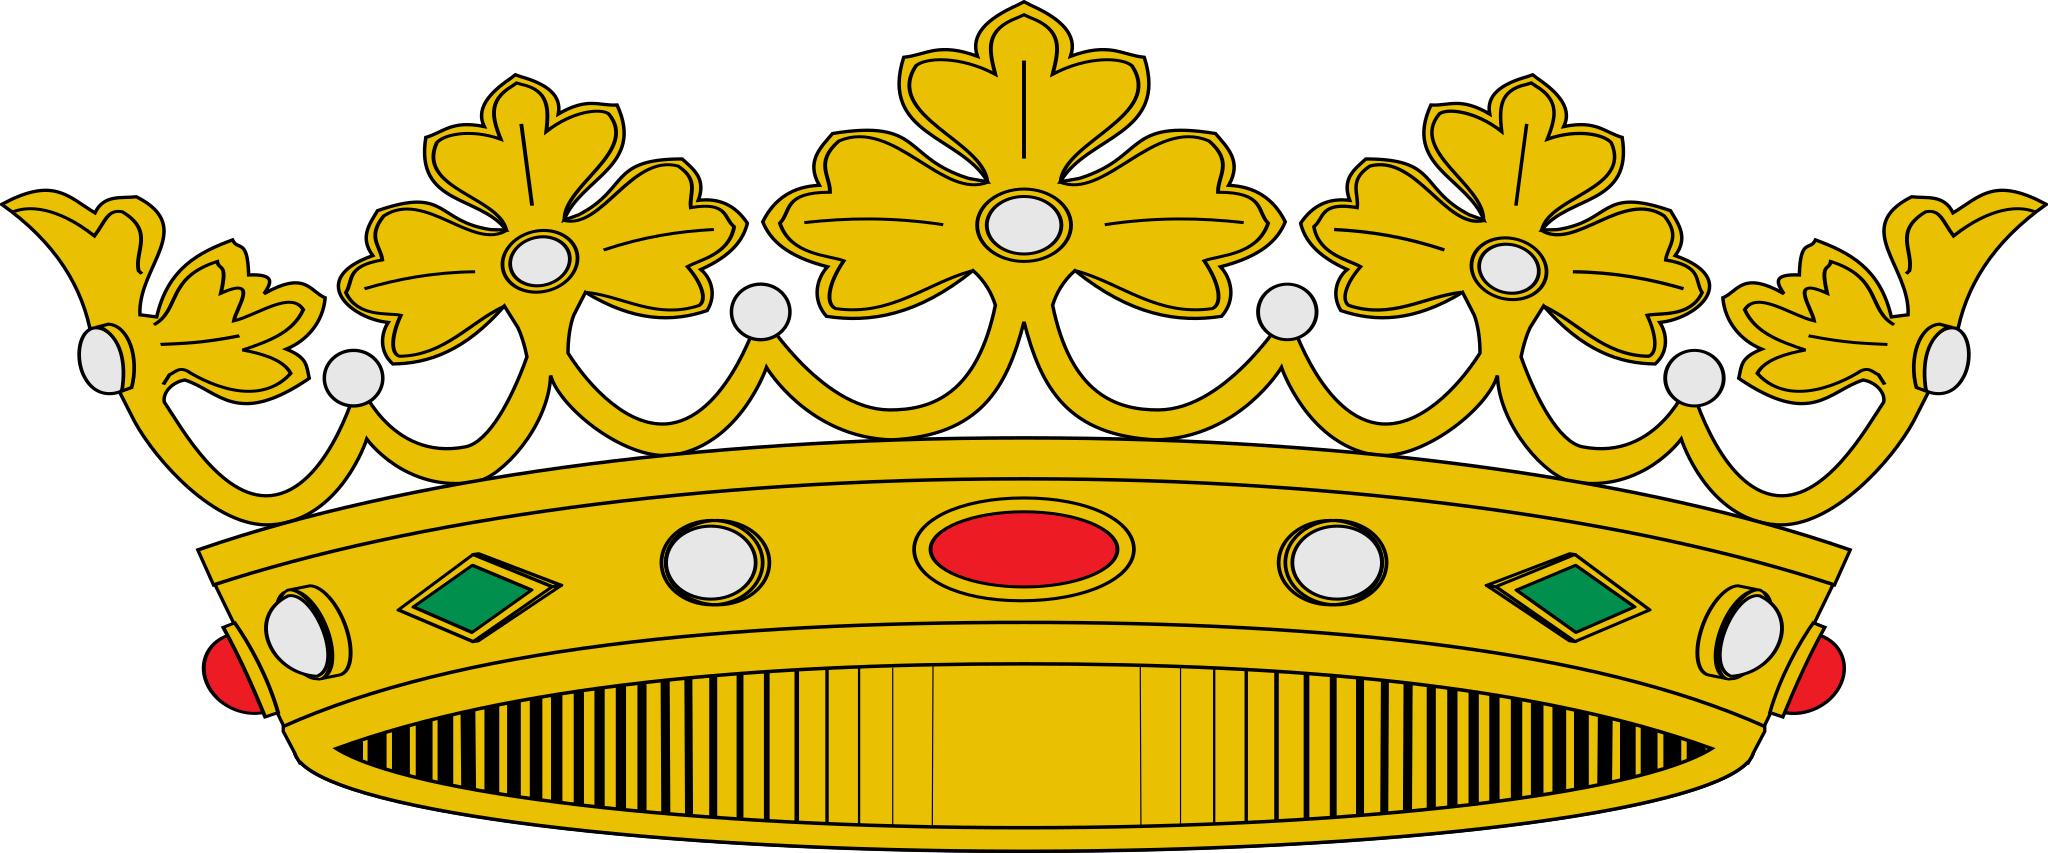 Корона svg. Картинка короны на белом фоне. Royal svg. Герб корона на табуретке. Герб корона какого города